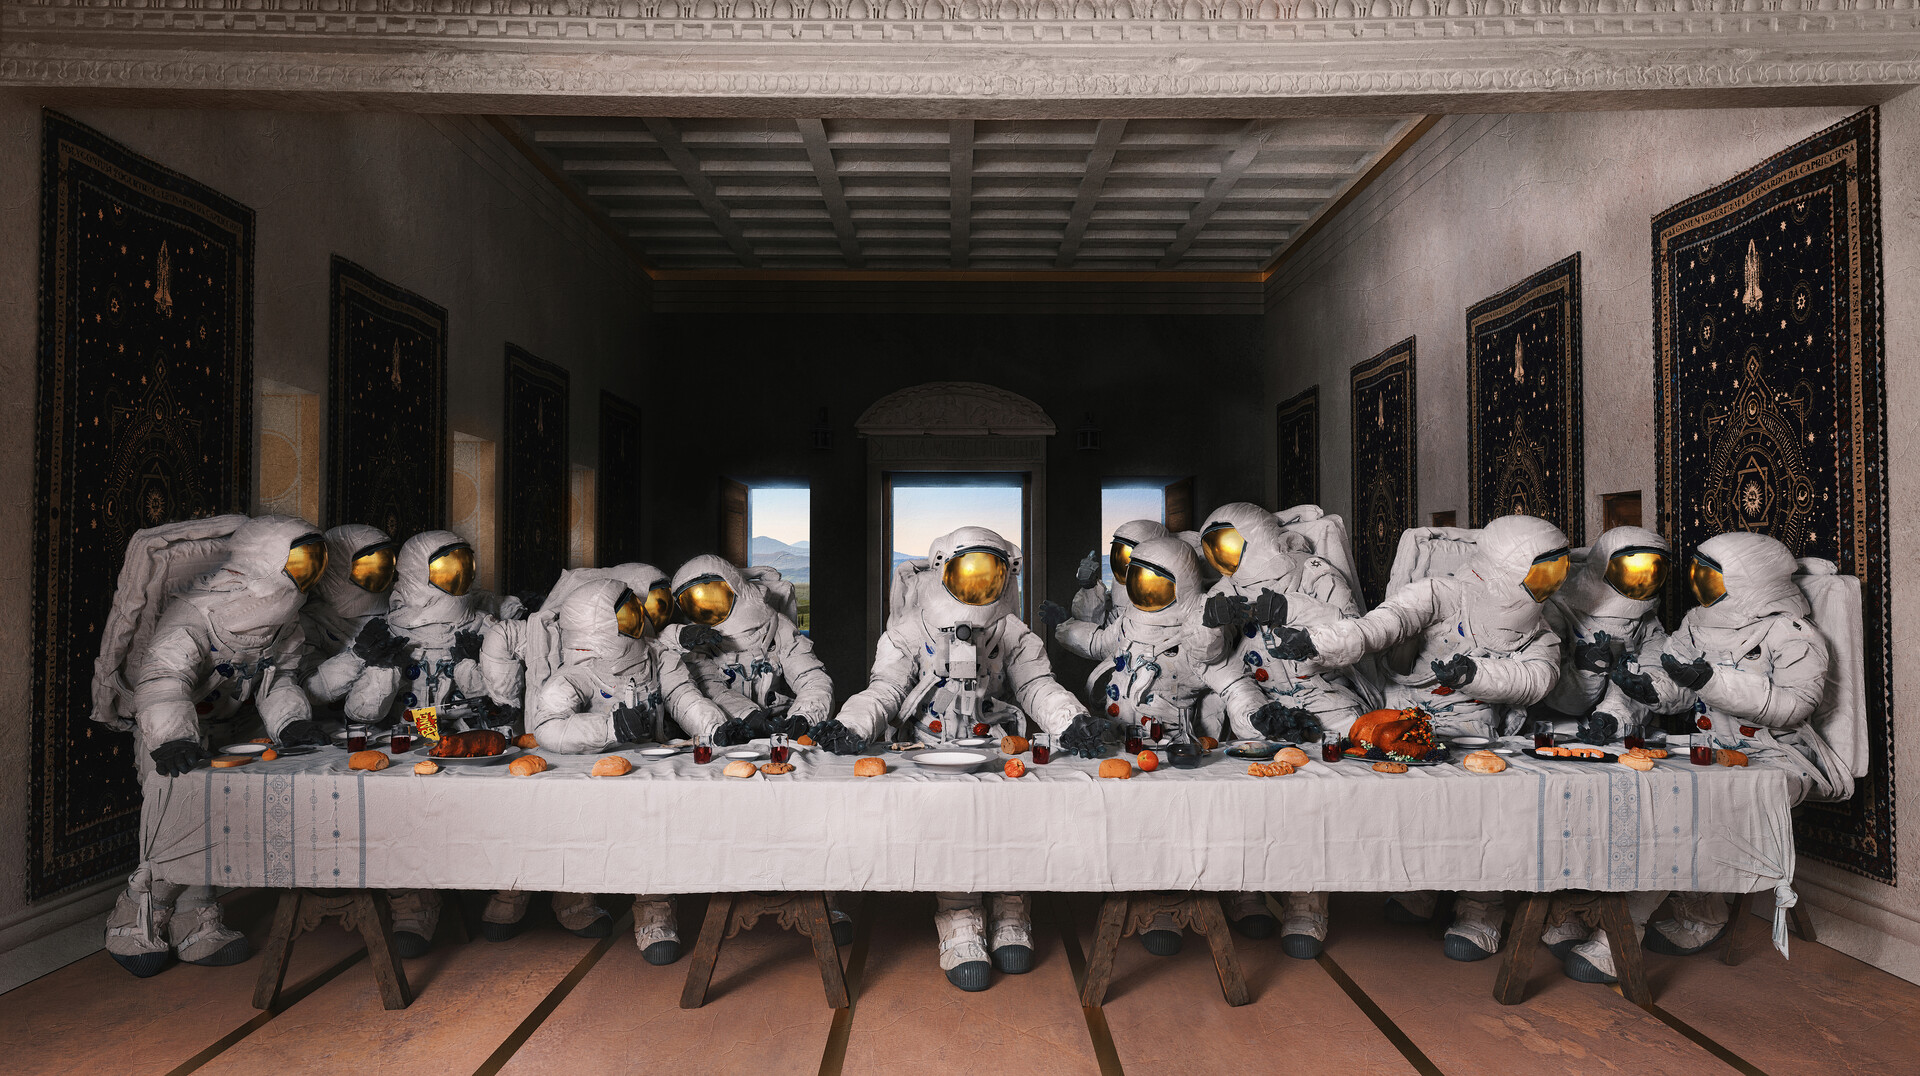 Artwork Fantasy Art Astronaut The Last Supper Parody 1920x1076